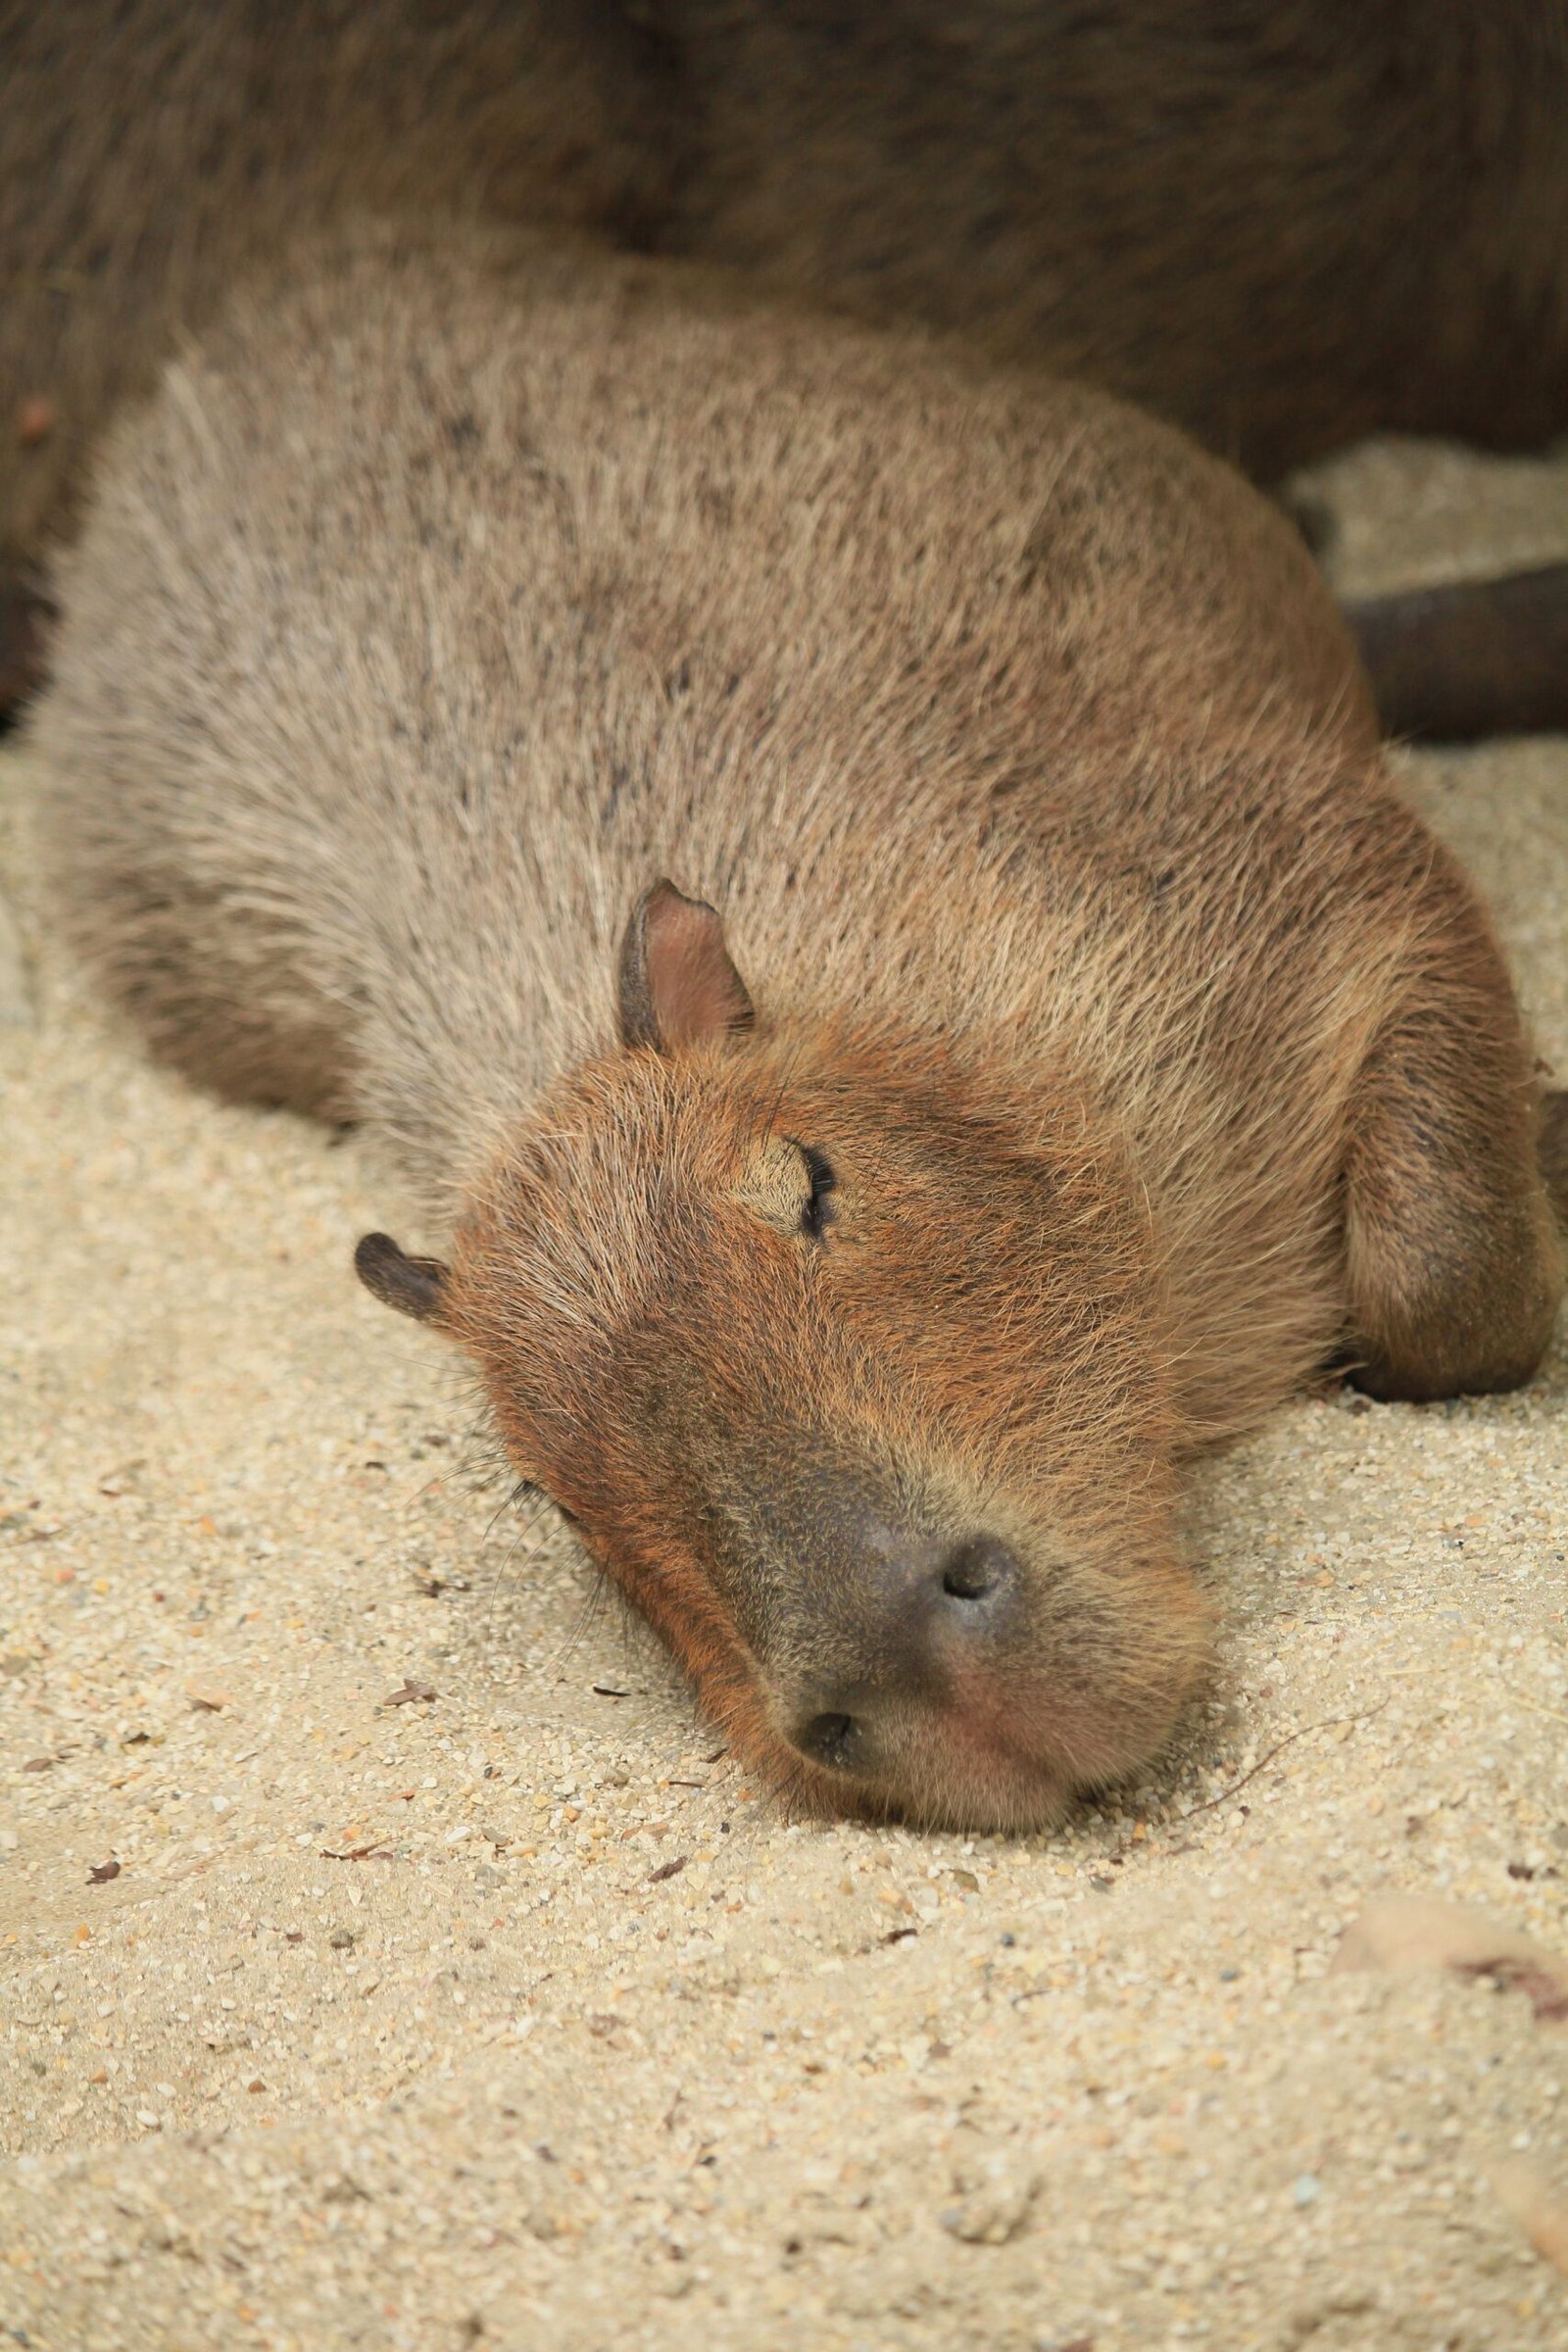 The Lifespan of Capybaras as Pets